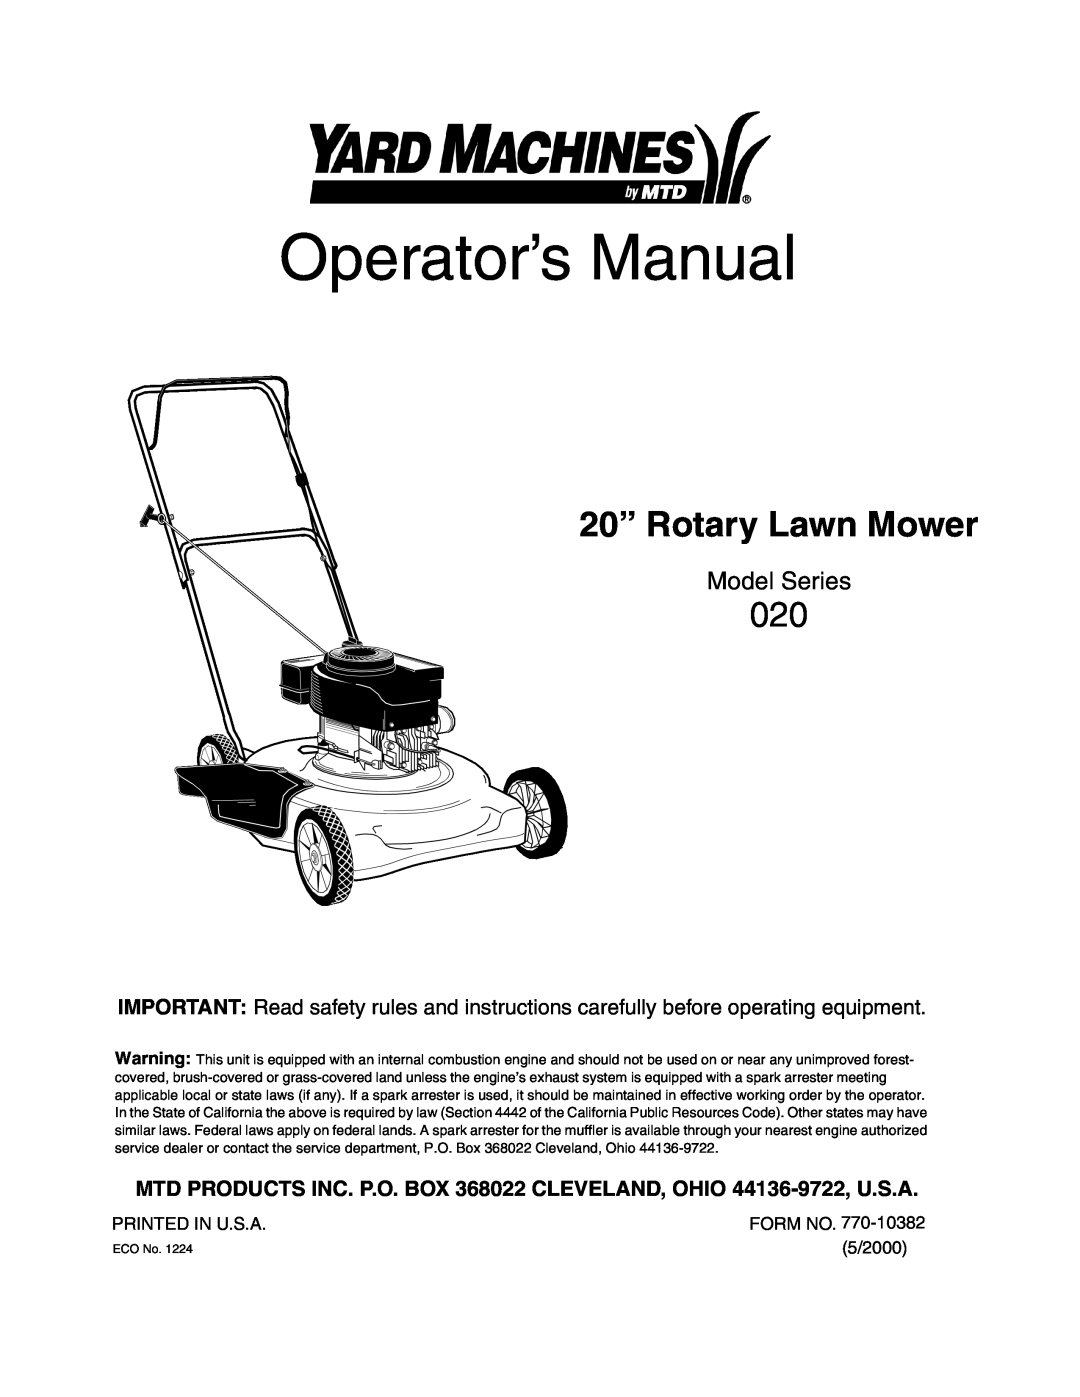 Yard Machines 20 manual MTD PRODUCTS INC. P.O. BOX 368022 CLEVELAND, OHIO 44136-9722, U.S.A, Operator’s Manual 